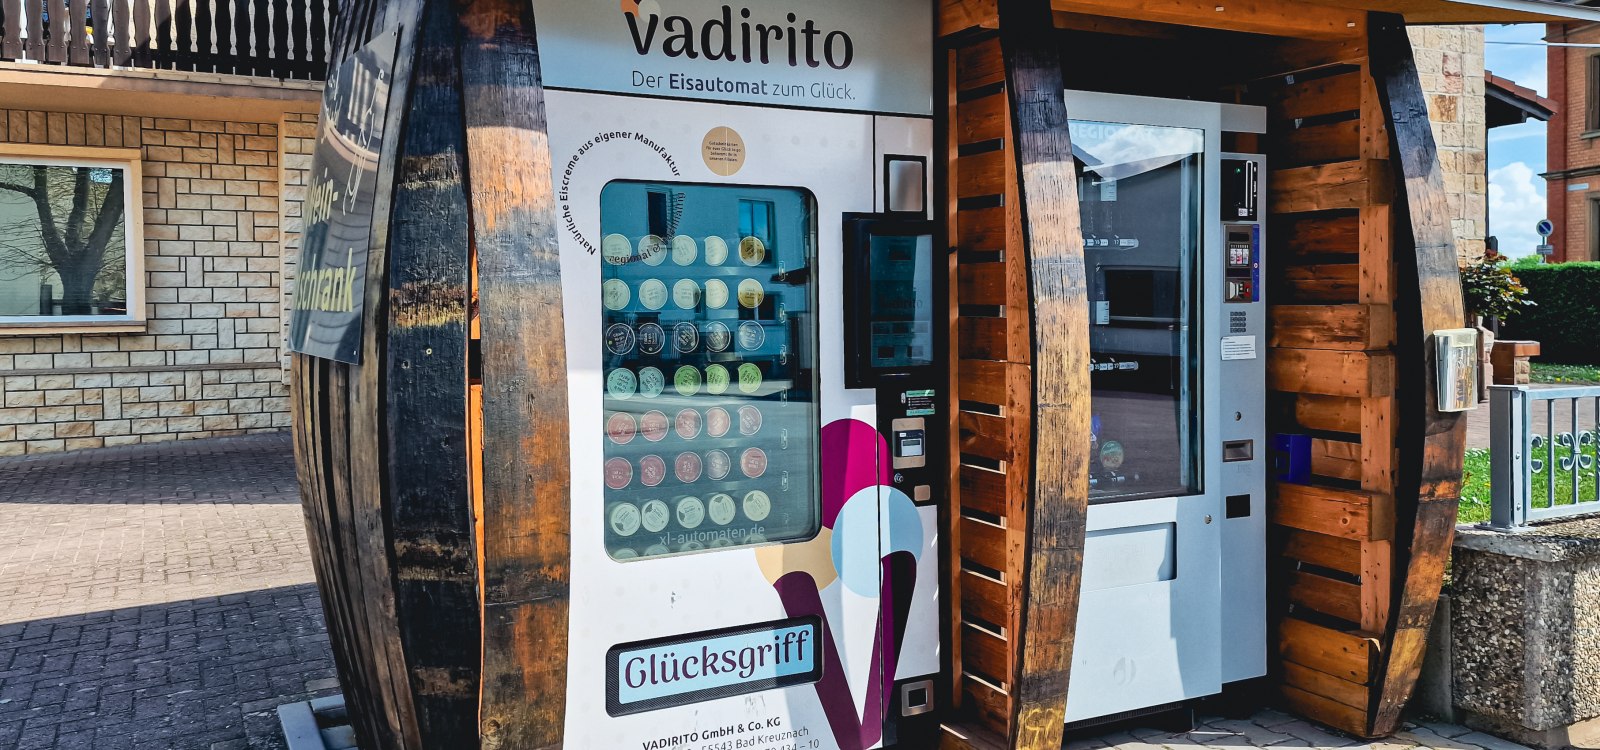 Vadirito ice vending machine in Gau-Bickelheim